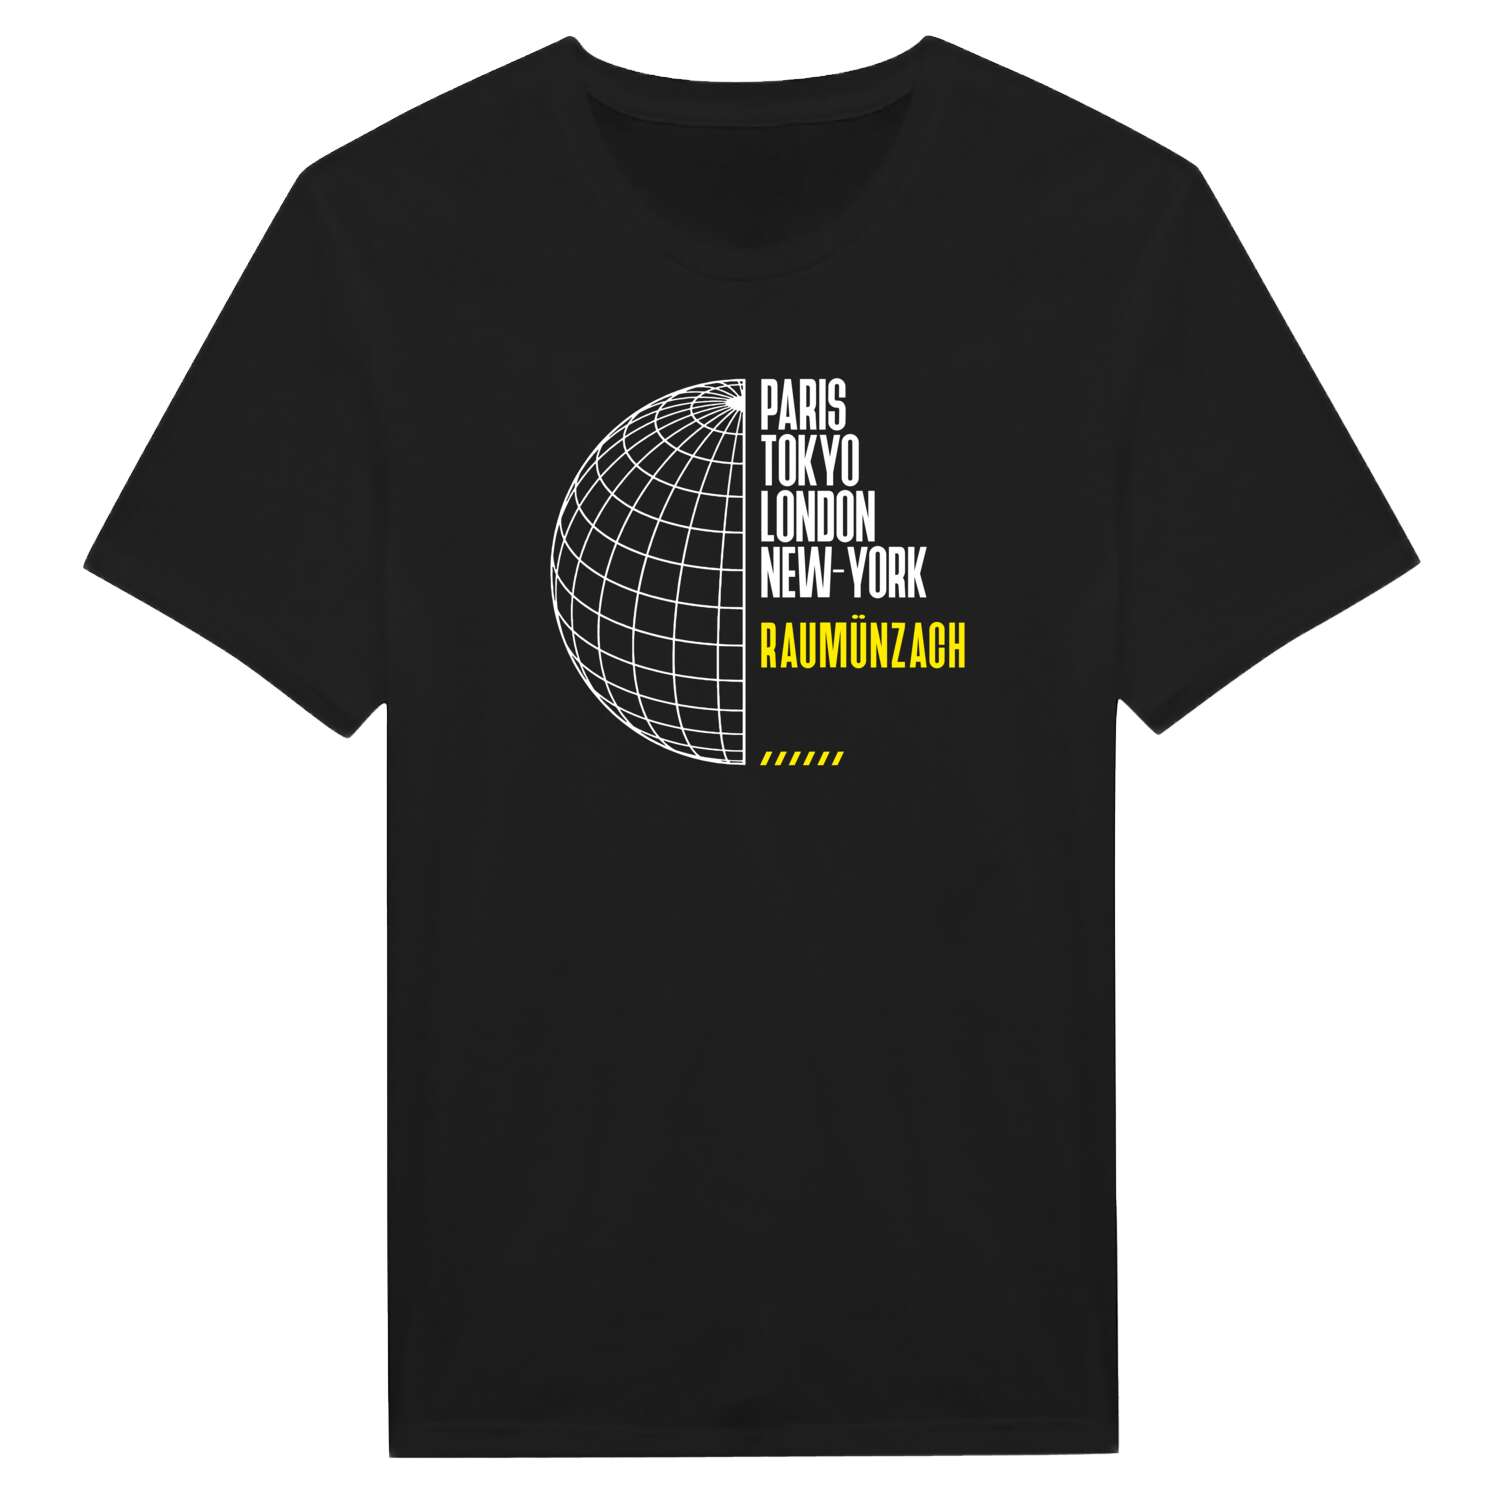 Raumünzach T-Shirt »Paris Tokyo London«